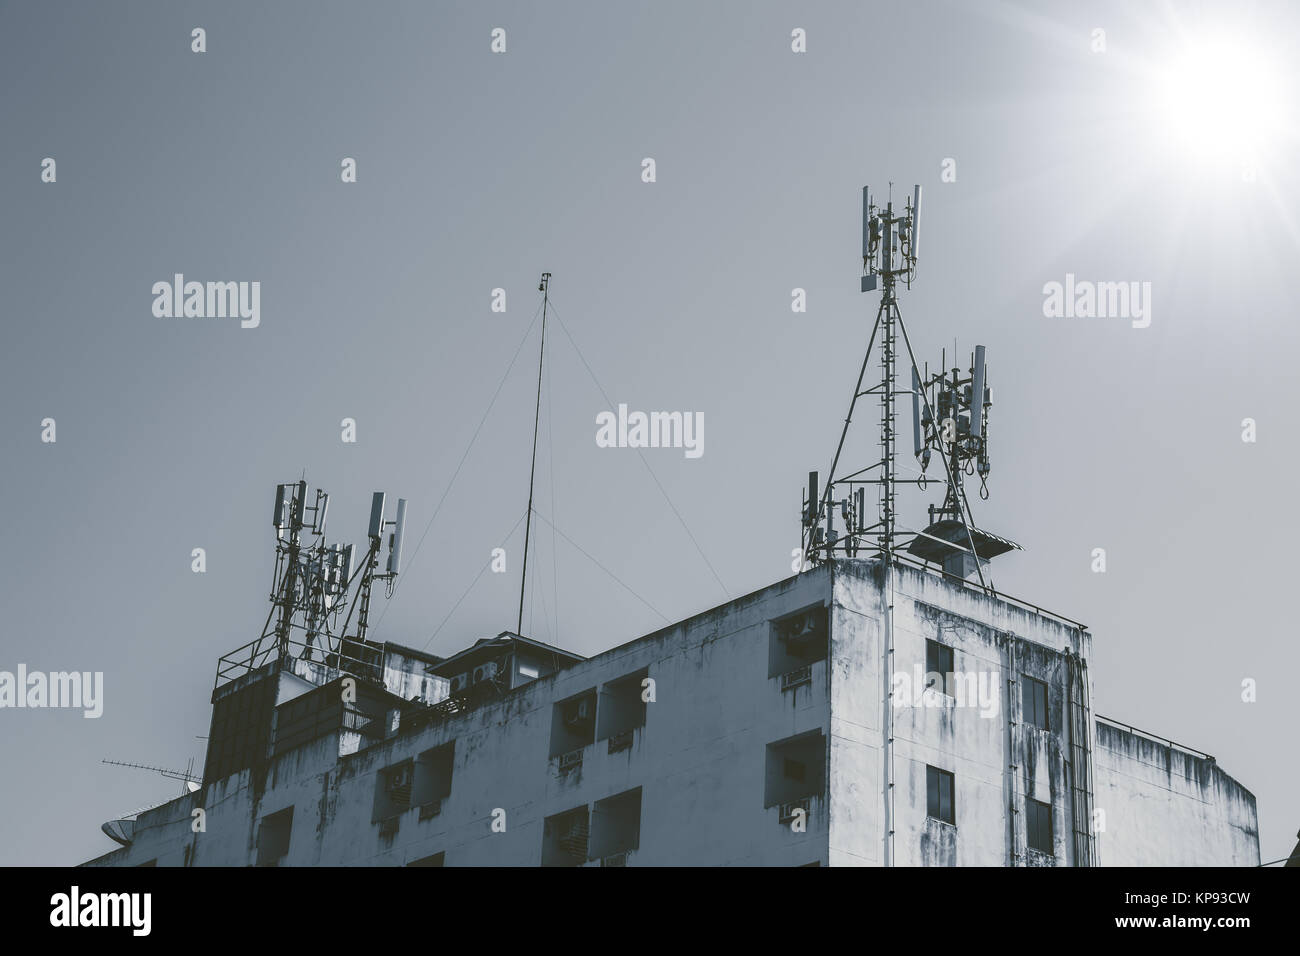 Kommunikation Turm der alten Gebäude Telefon Industrie in armen Land Konzept Stockfoto